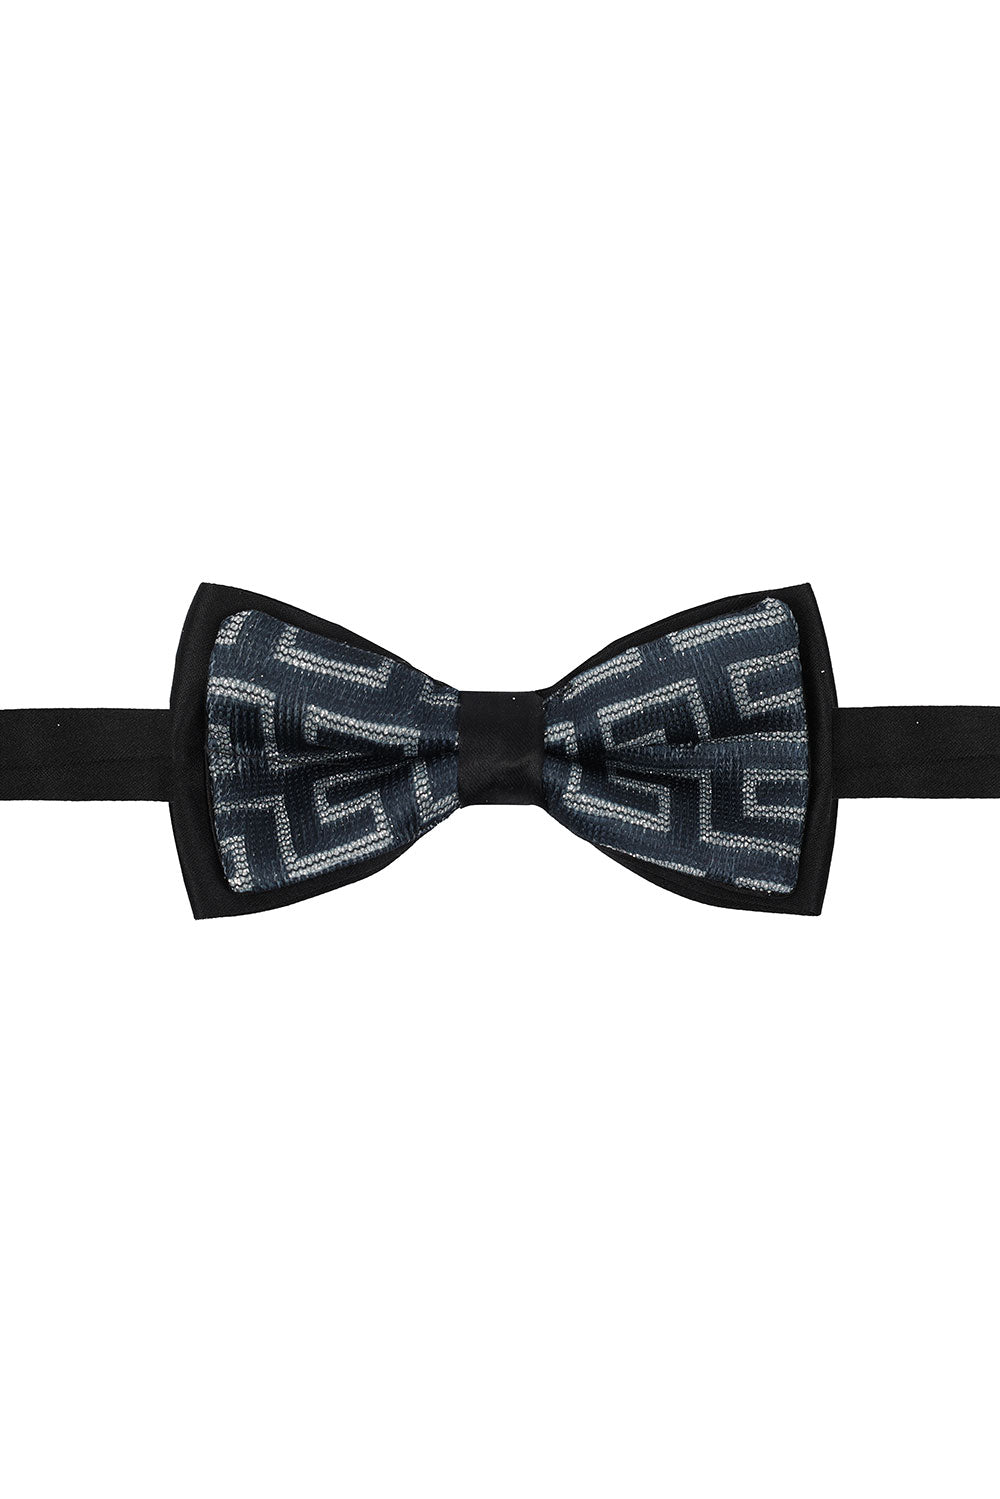 BARABAS Men Greek key Pattern Baroque Luxury Bow Tie 2BW3098  Black and Silver